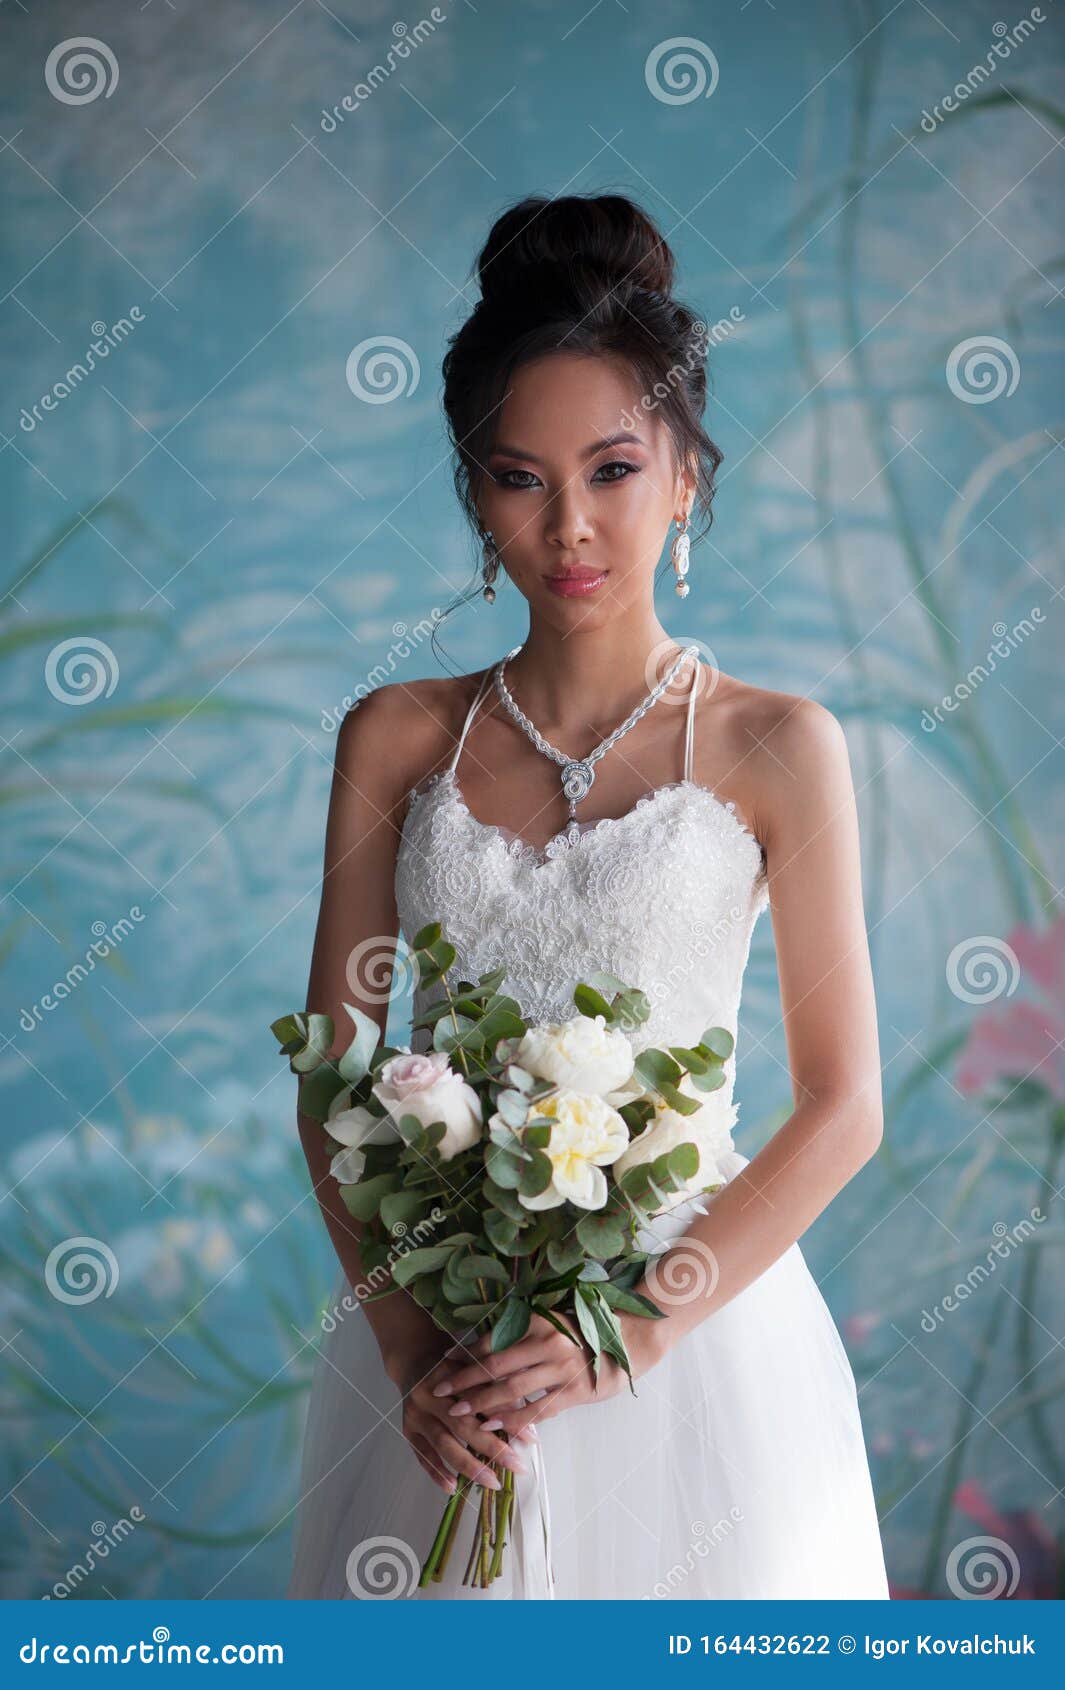 brides Com beautiful asian asian